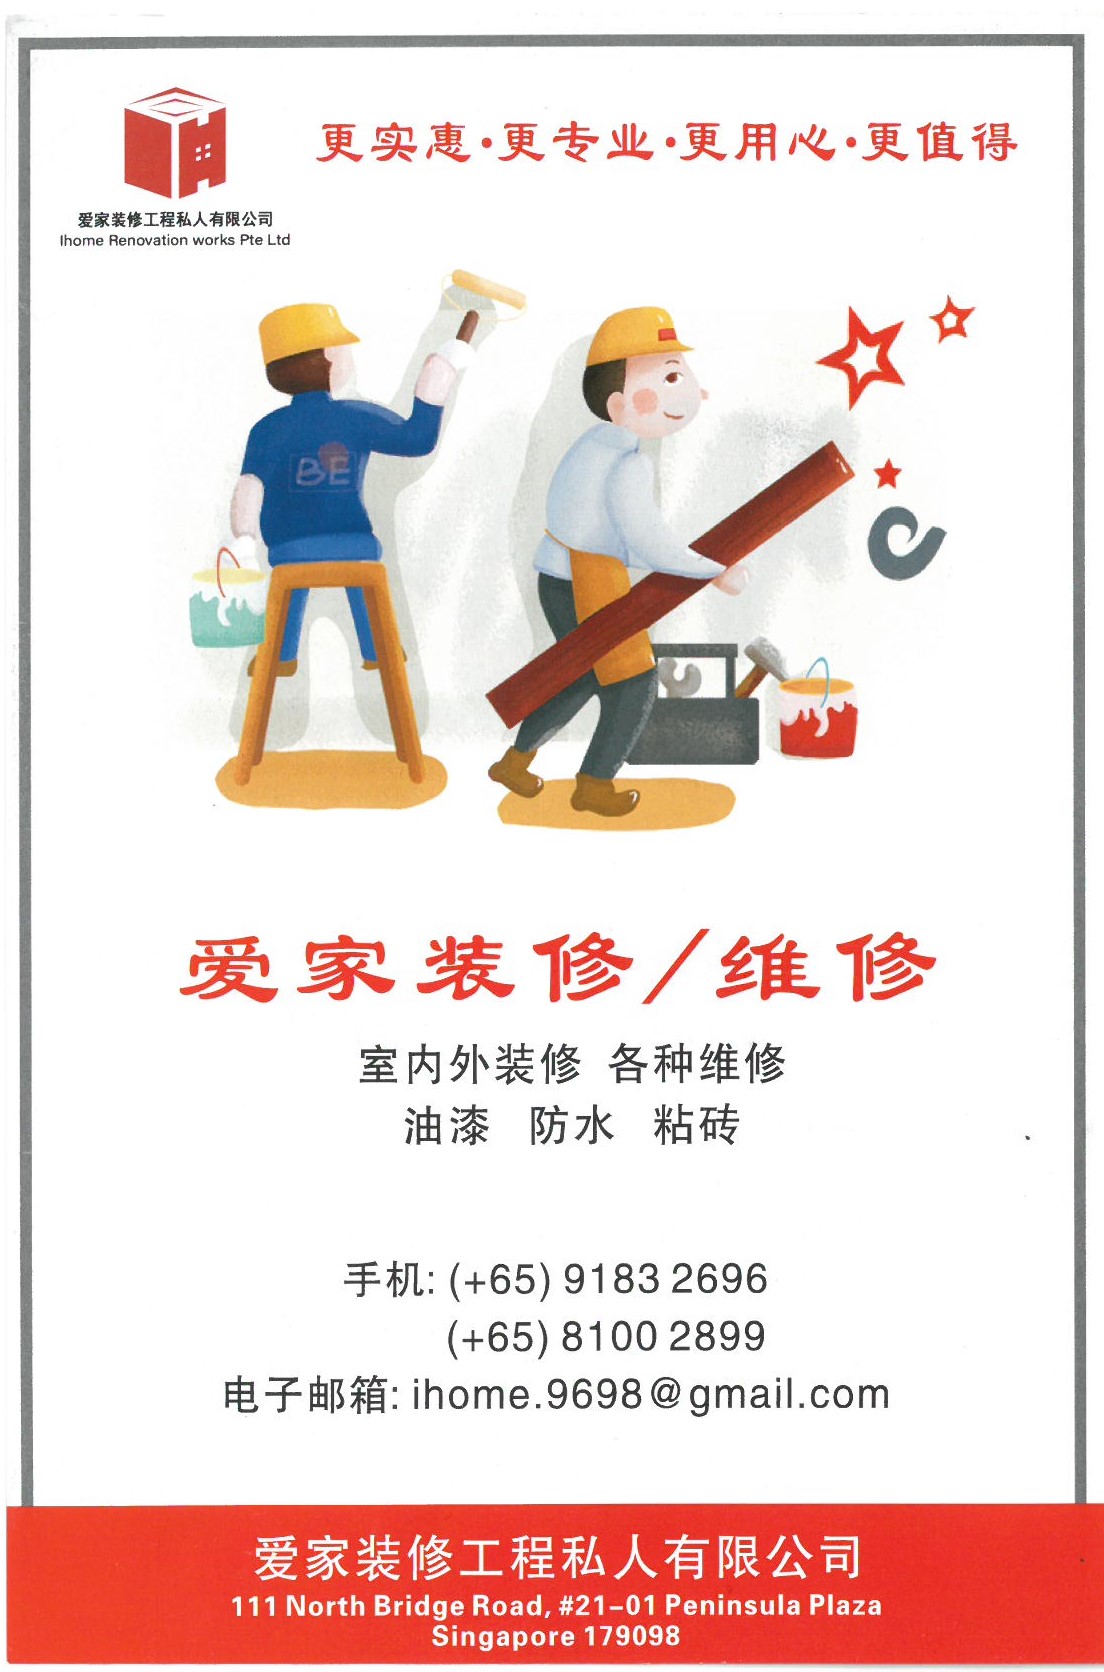 Ihome Chinese Advertising1.jpg